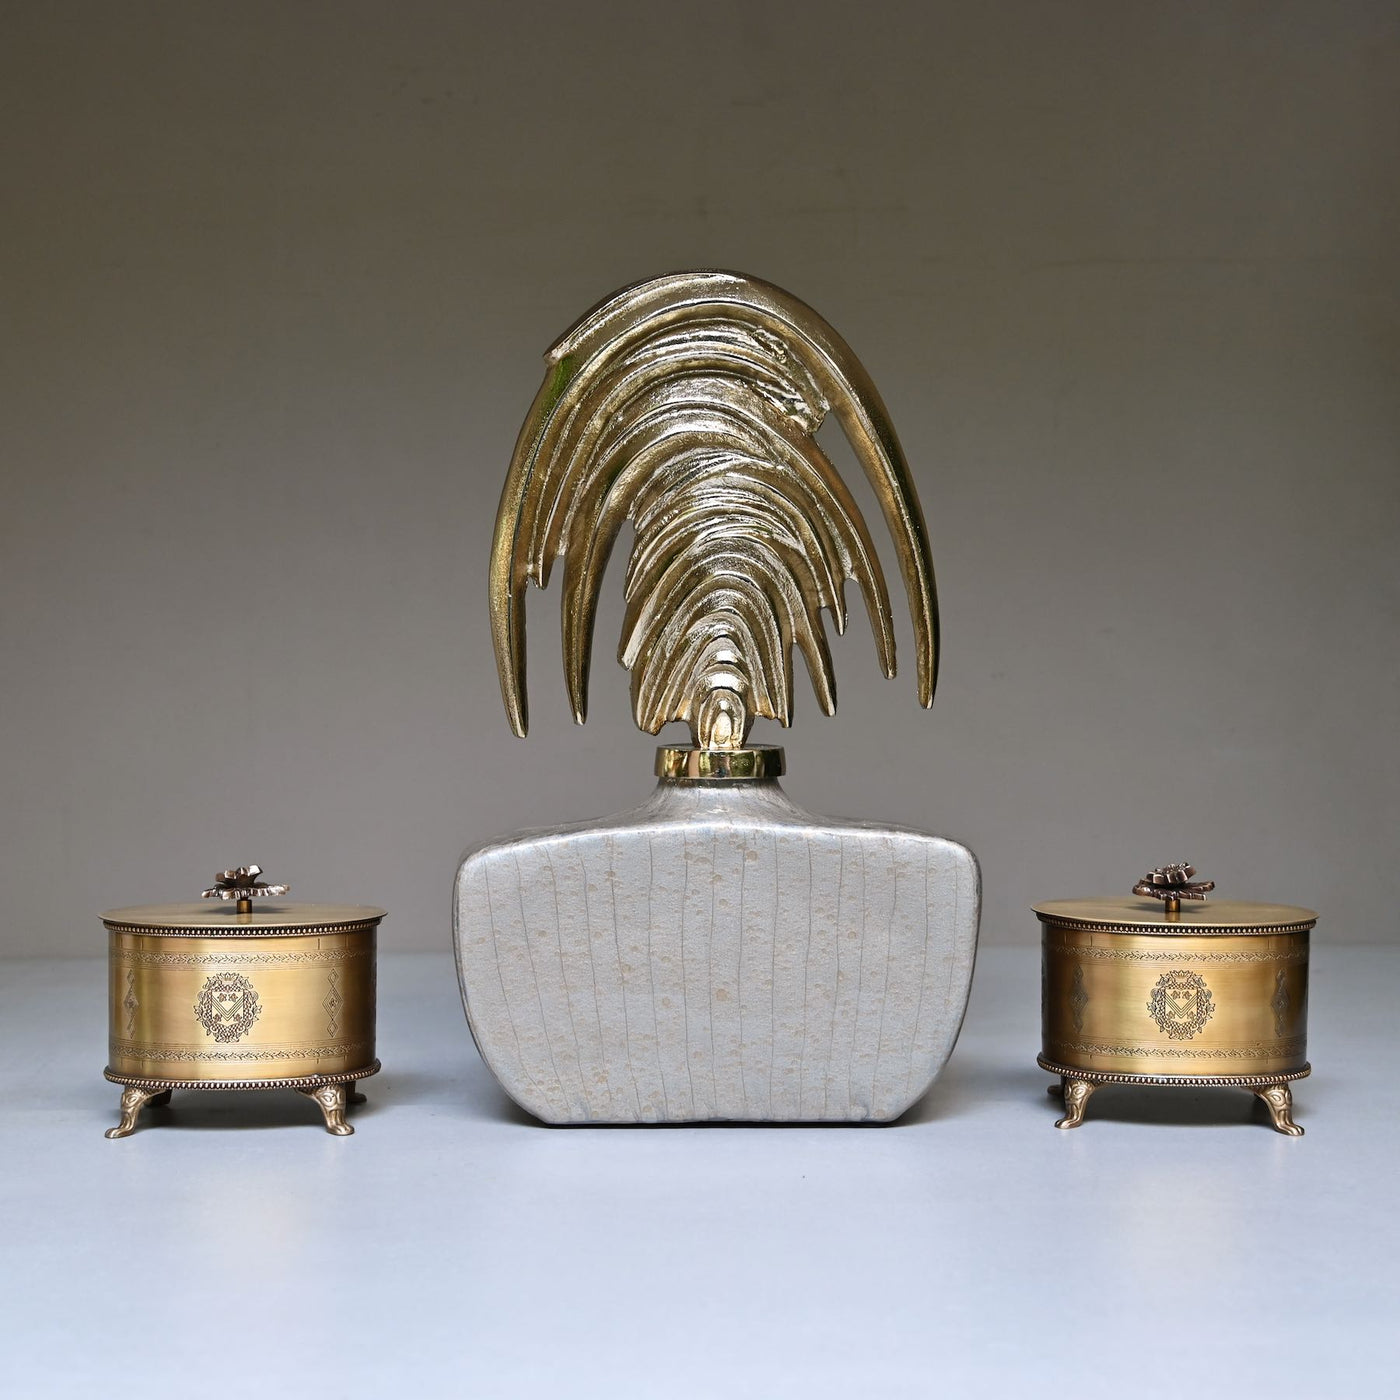 Decorative Jar with Ornamental Stopper